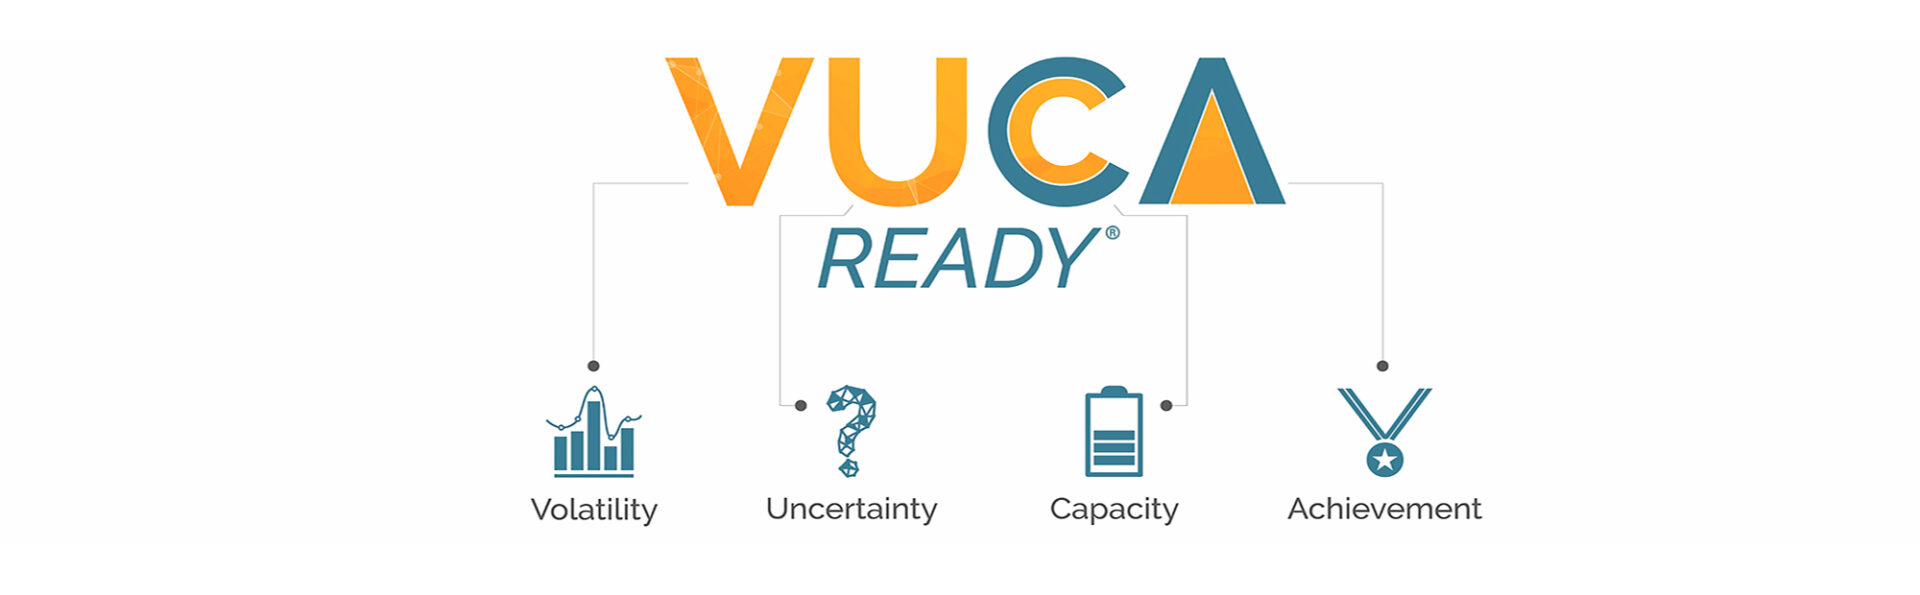 VUCA Ready® Quiz from Bobbie LaPorte and Associates